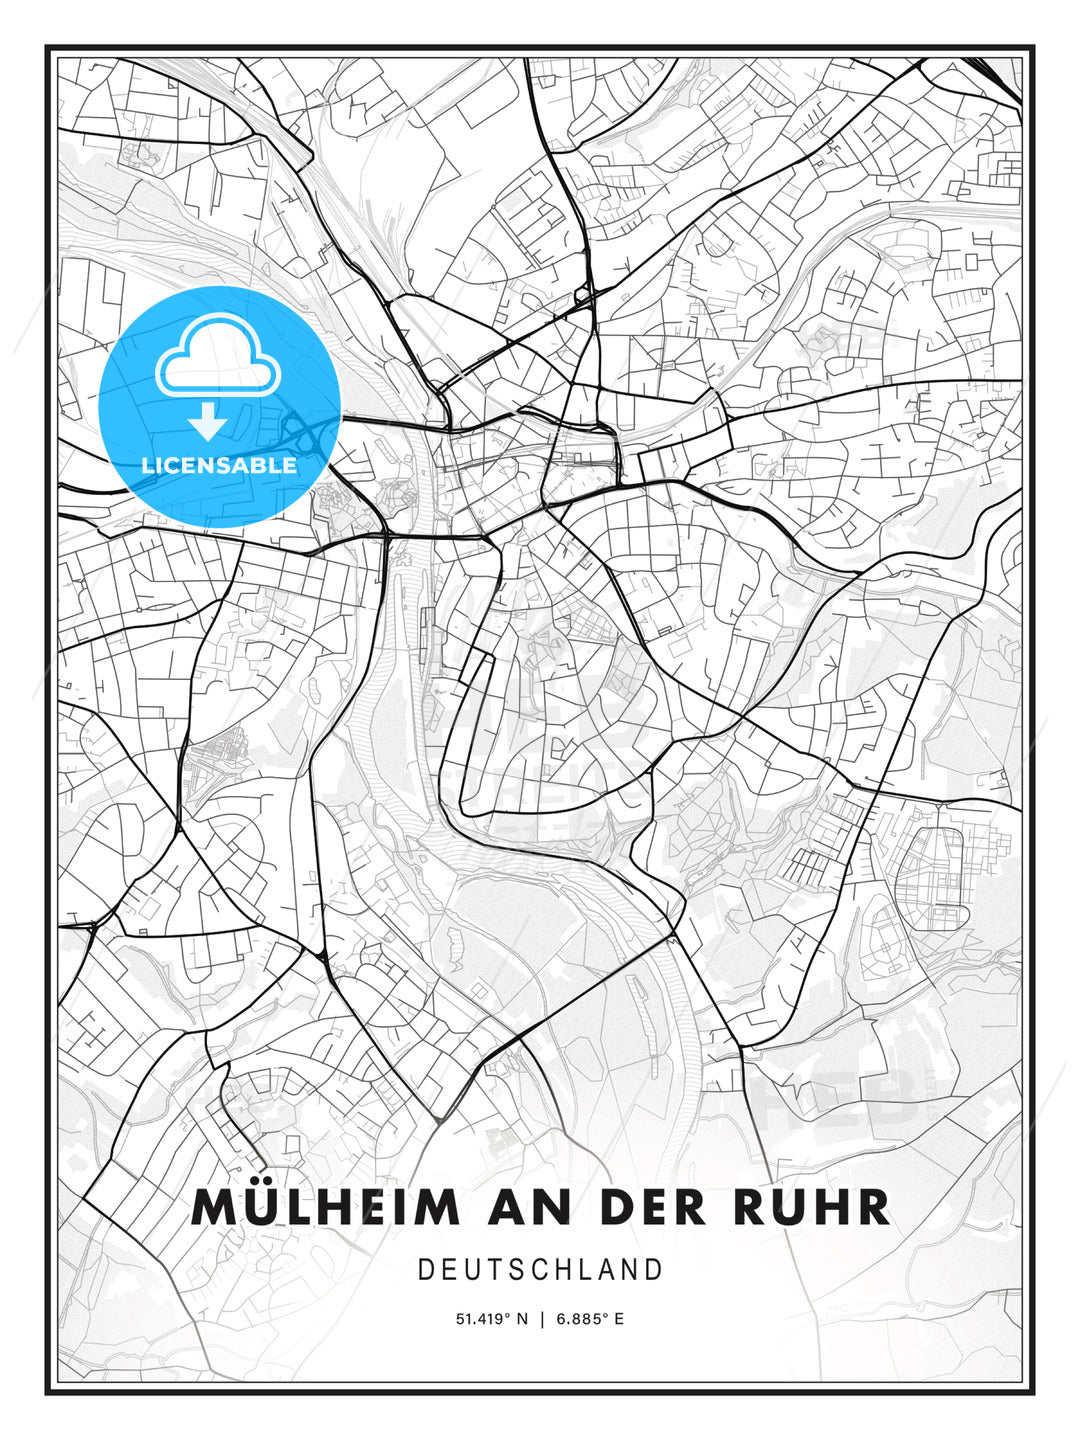 MÜLHEIM AN DER RUHR / Mulheim an der Ruhr, Germany, Modern Print Template in Various Formats - HEBSTREITS Sketches